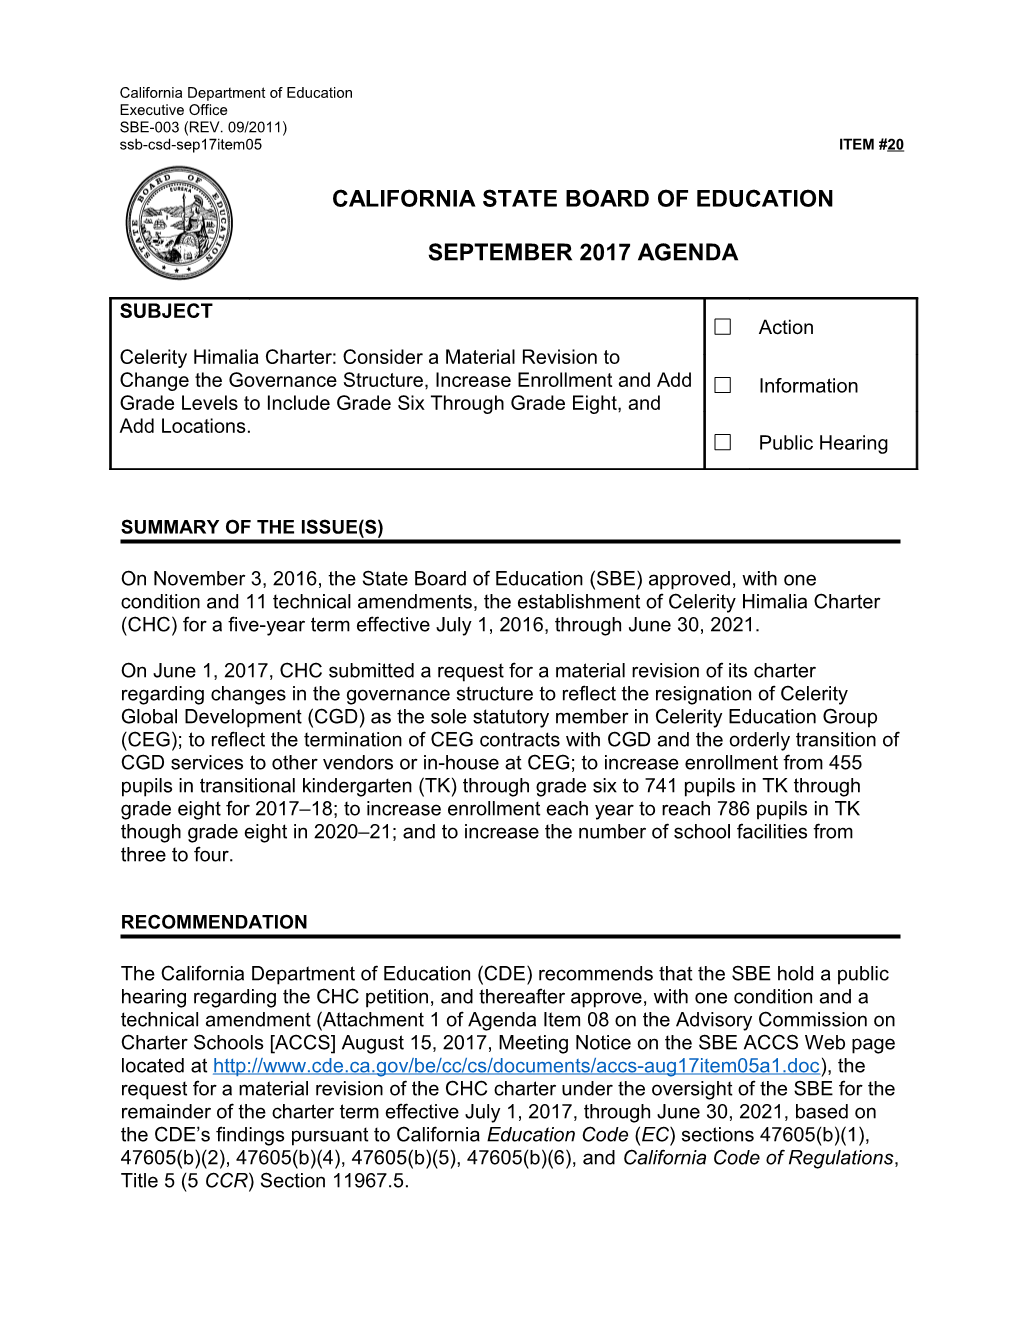 September 2017 Agenda Item 20 - Meeting Agendas (CA State Board of Education)